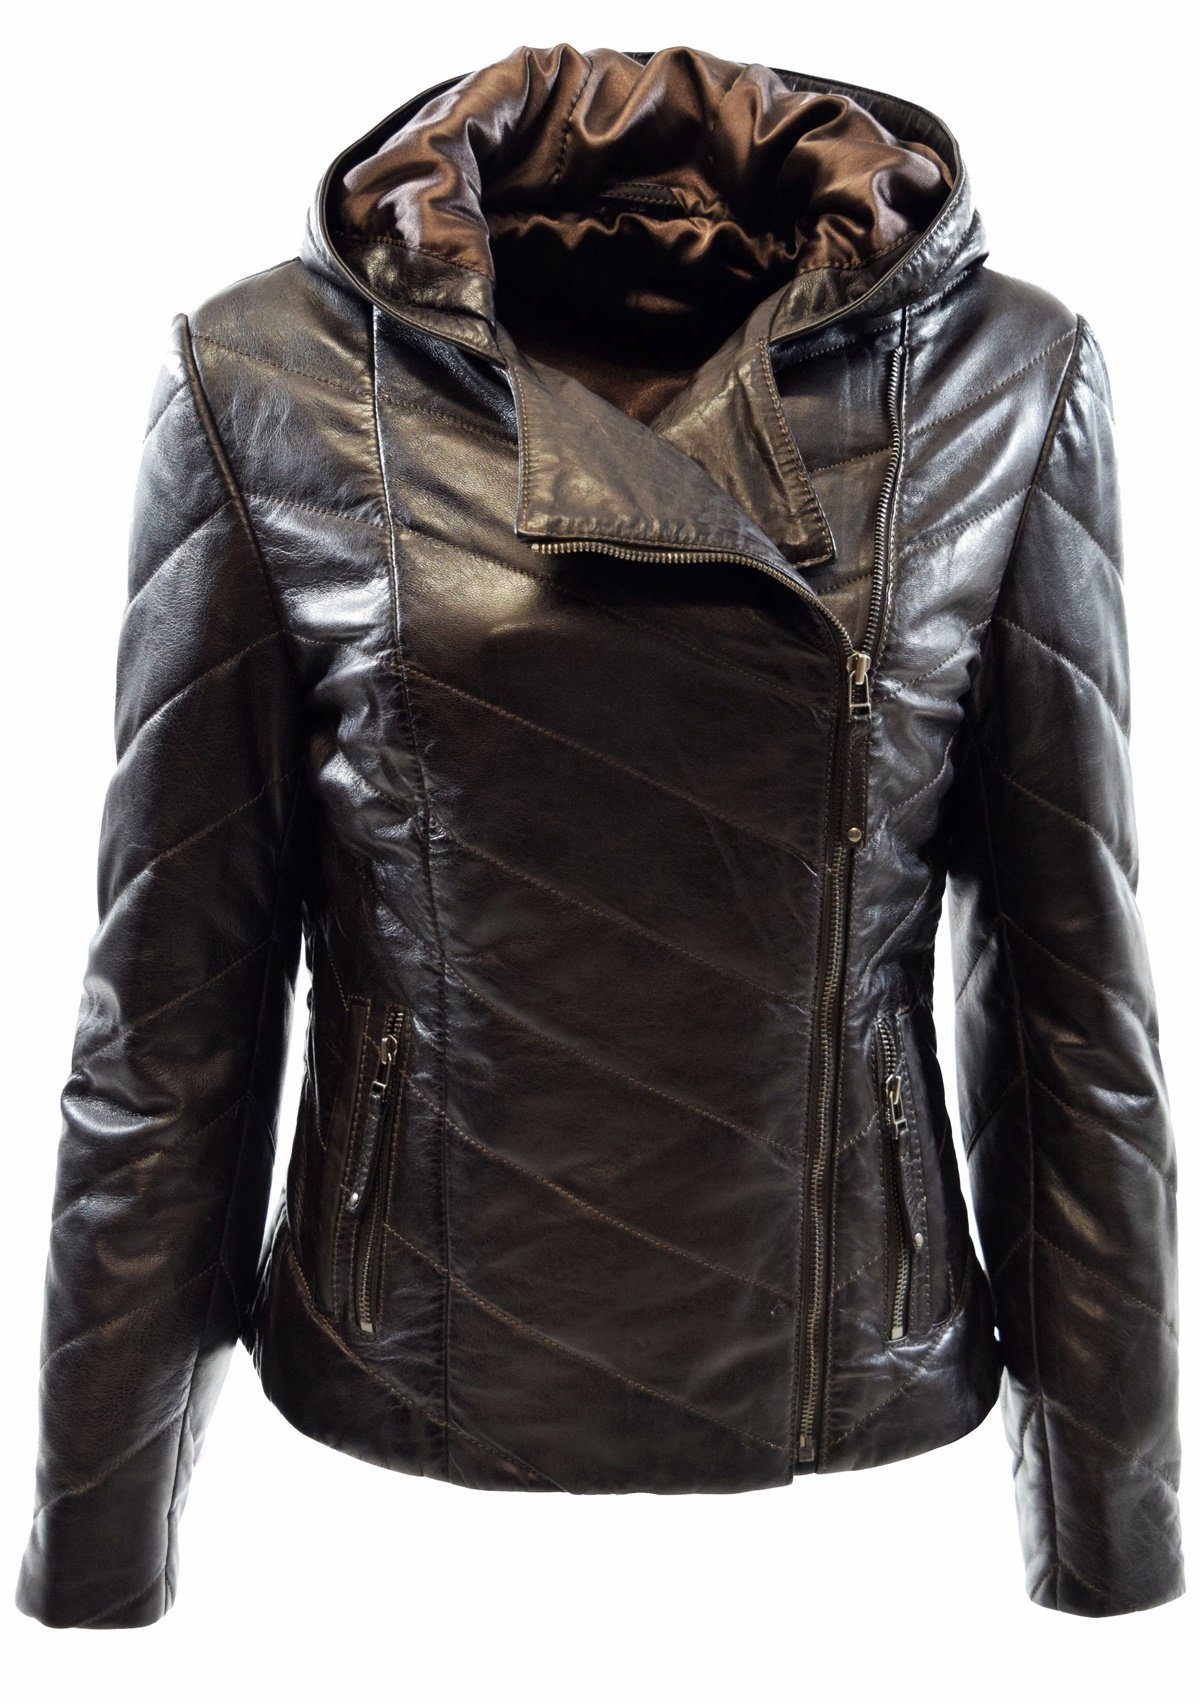 Zimmert Leather Lederjacke Elda Stepp-Lederjacke aus weichem Leder mit Kapuze Schwarz, Braun Tiefbraun | Übergangsjacken